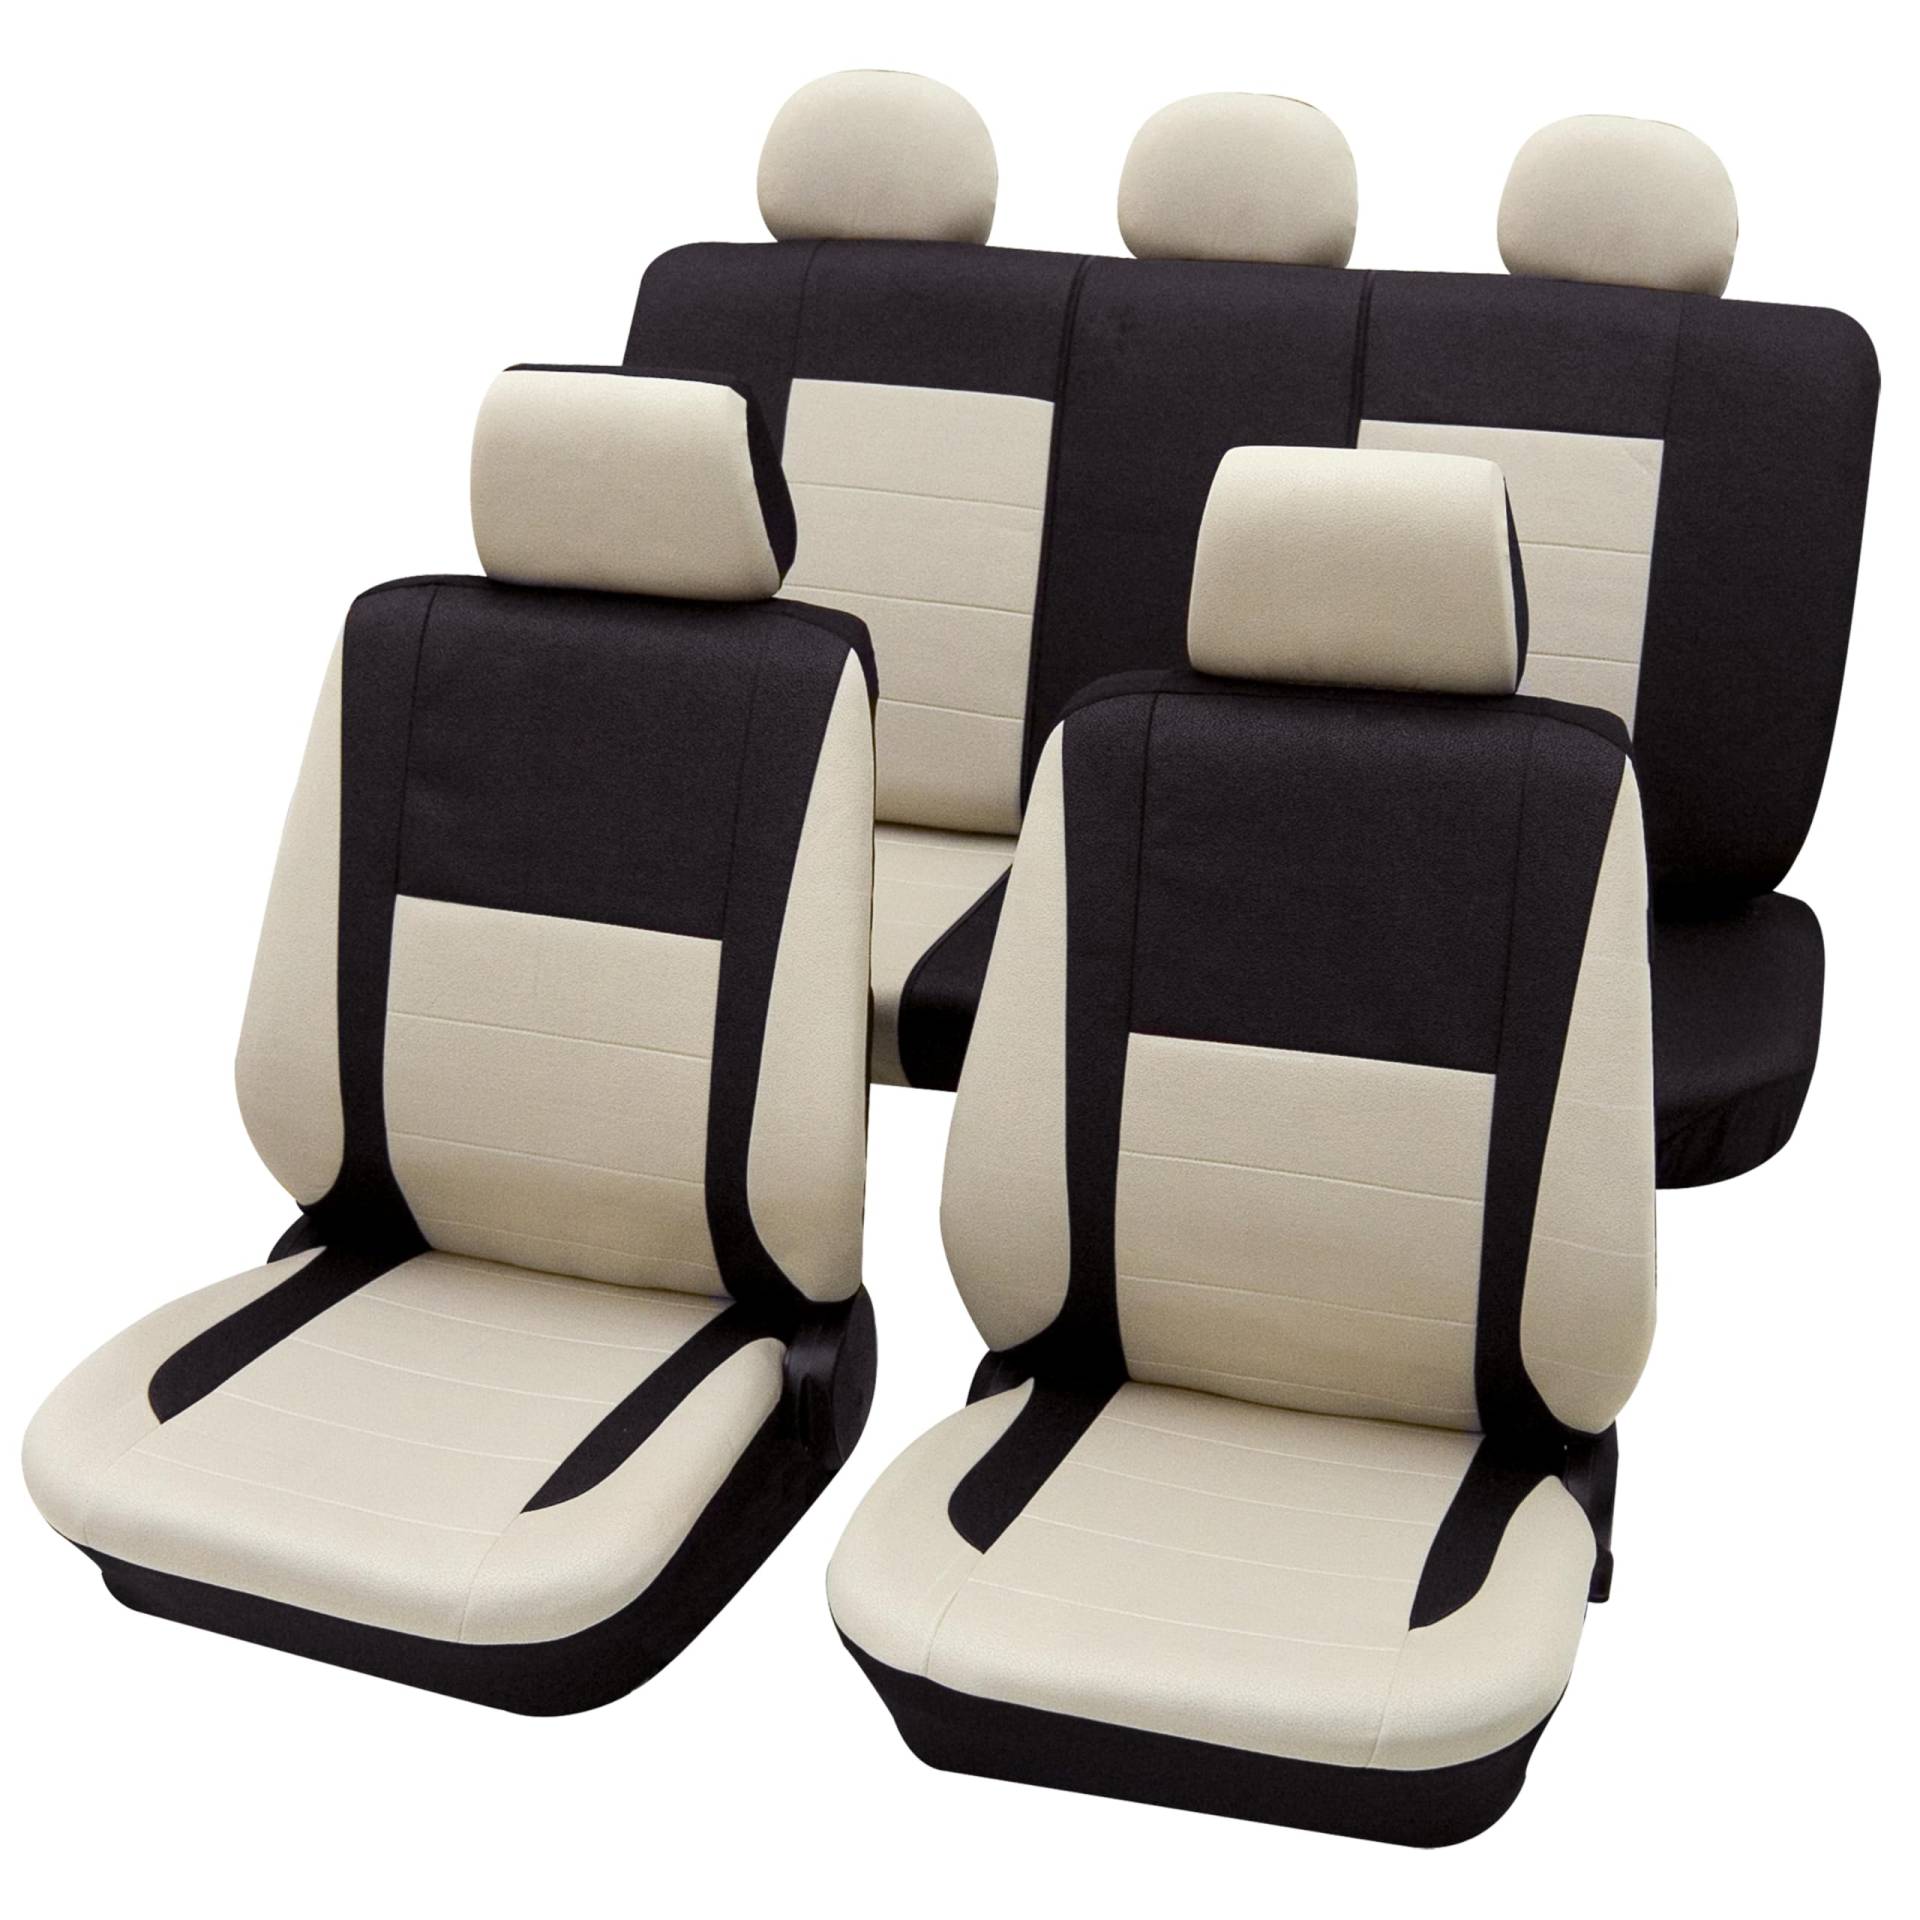 Petex Sitzbezugset Universal Eco Class Elegance beige 17-teilig Größe SAB 1 Vario Plus von PETEX